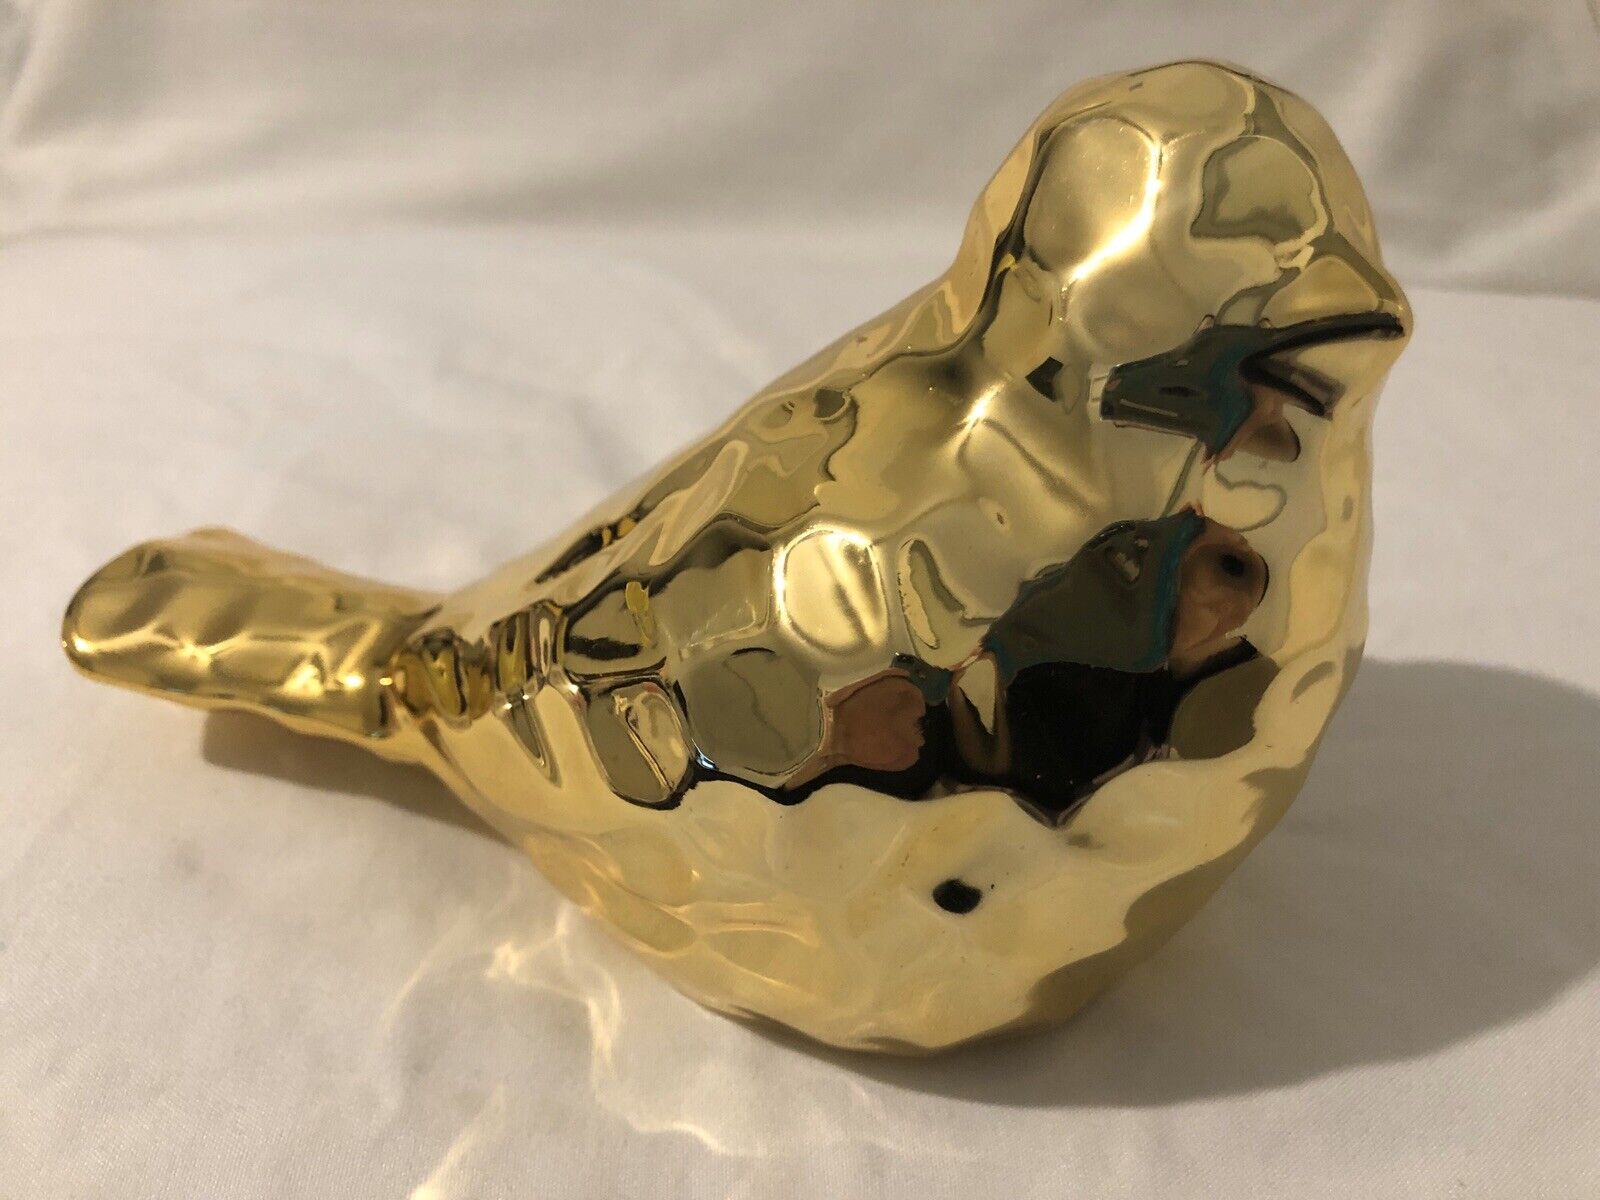 Golden Hammered Bird Figurine Sculpture Unique Home Decor Great Gift GLOBAL!